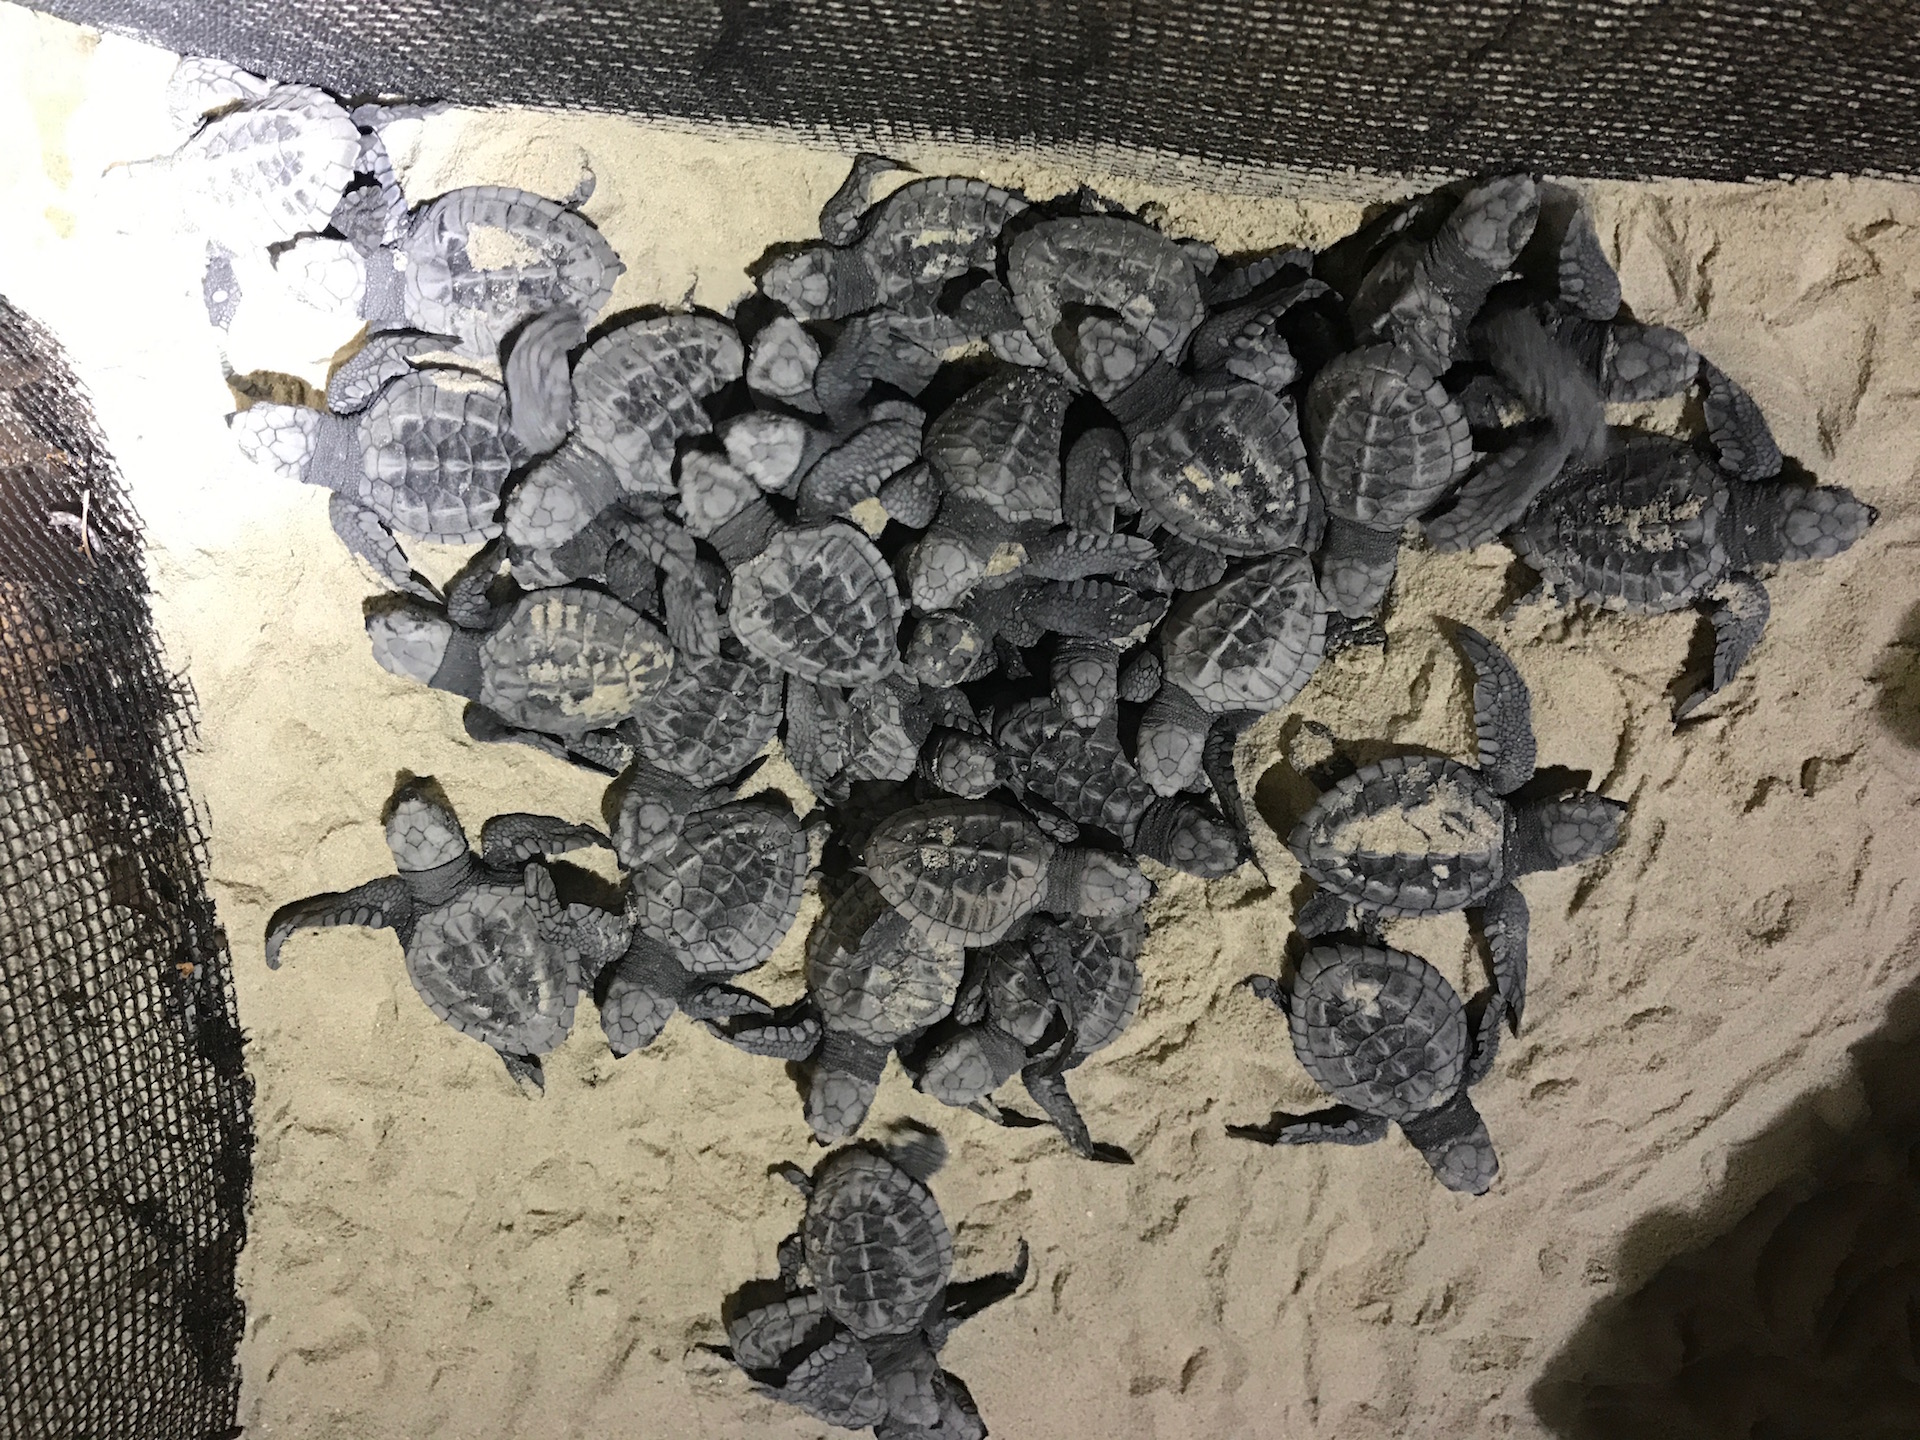 Philippinen Turtle Sanctuary